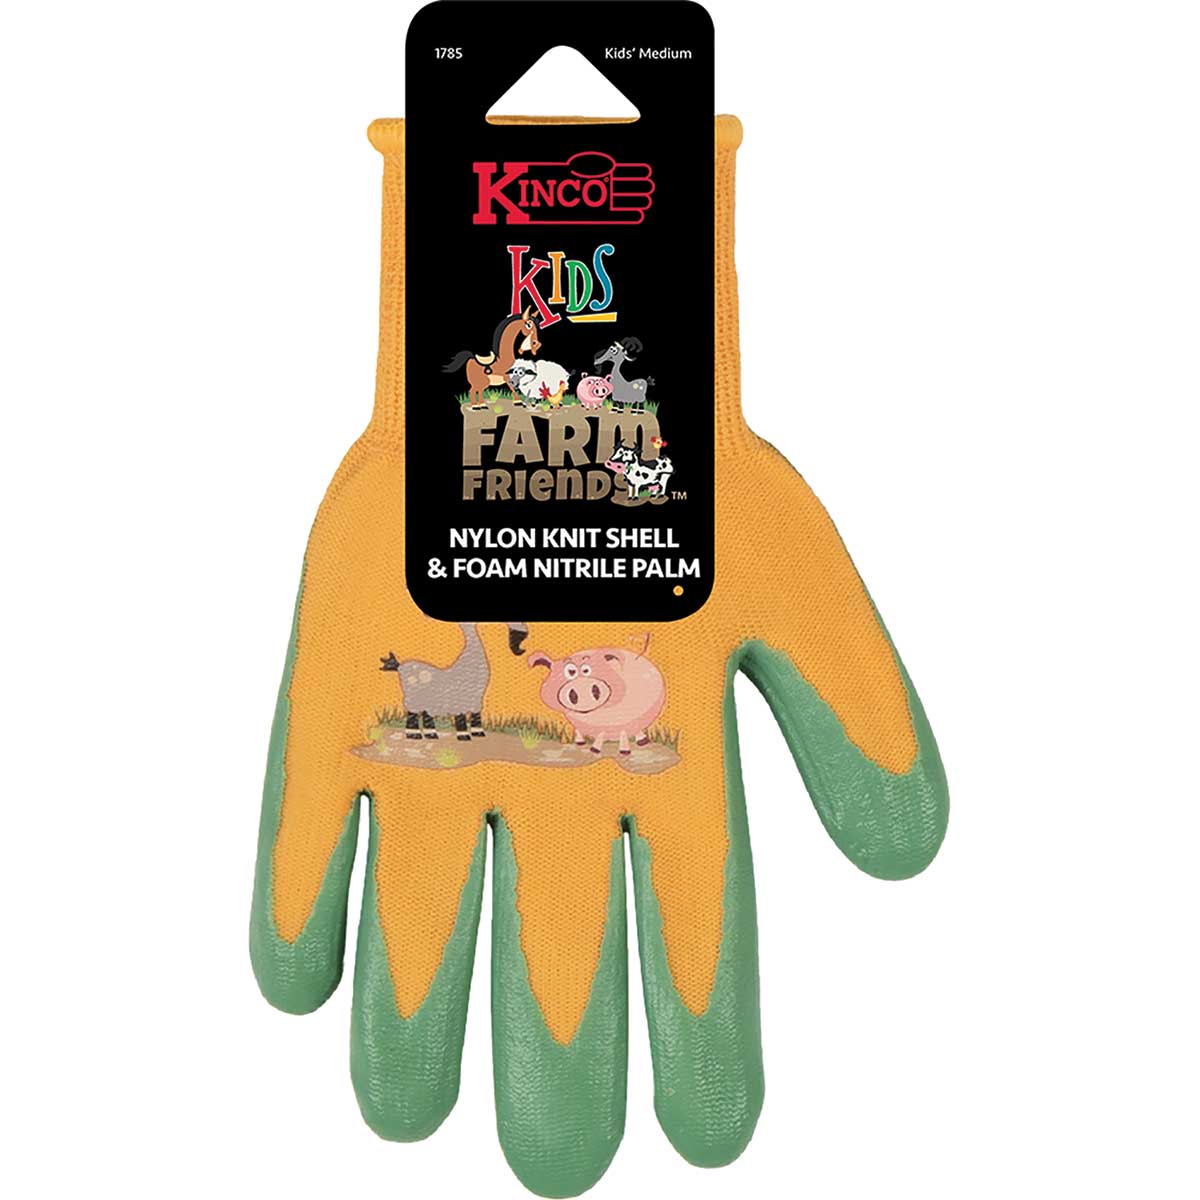 Kinco Kid's Farm Friends Nylon Knit Shell & Foam Nitrile Palm Gloves